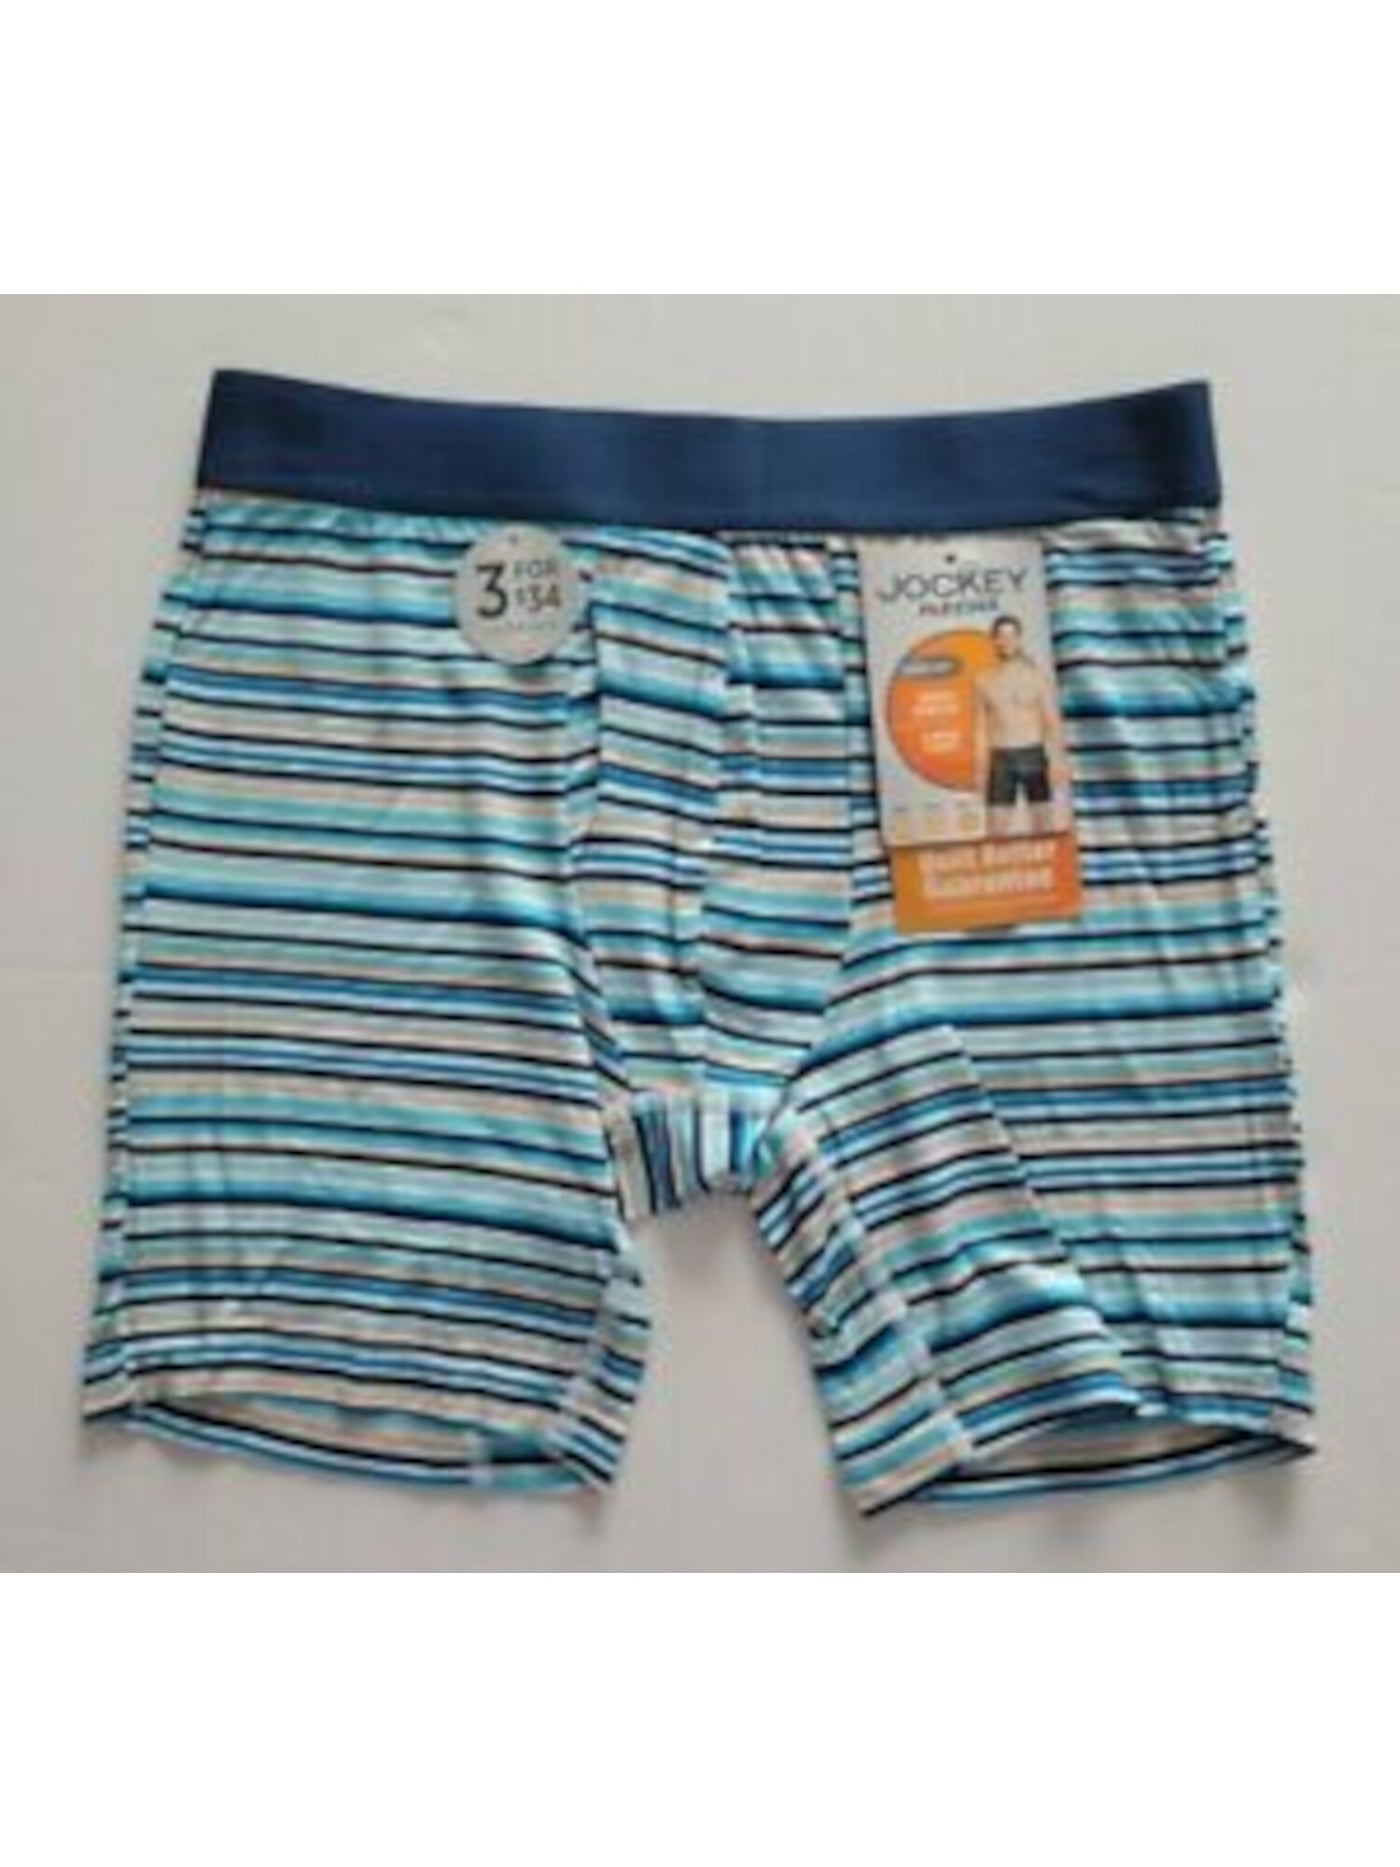 JOCKEY Intimates Blue Striped Boxer Brief Underwear S